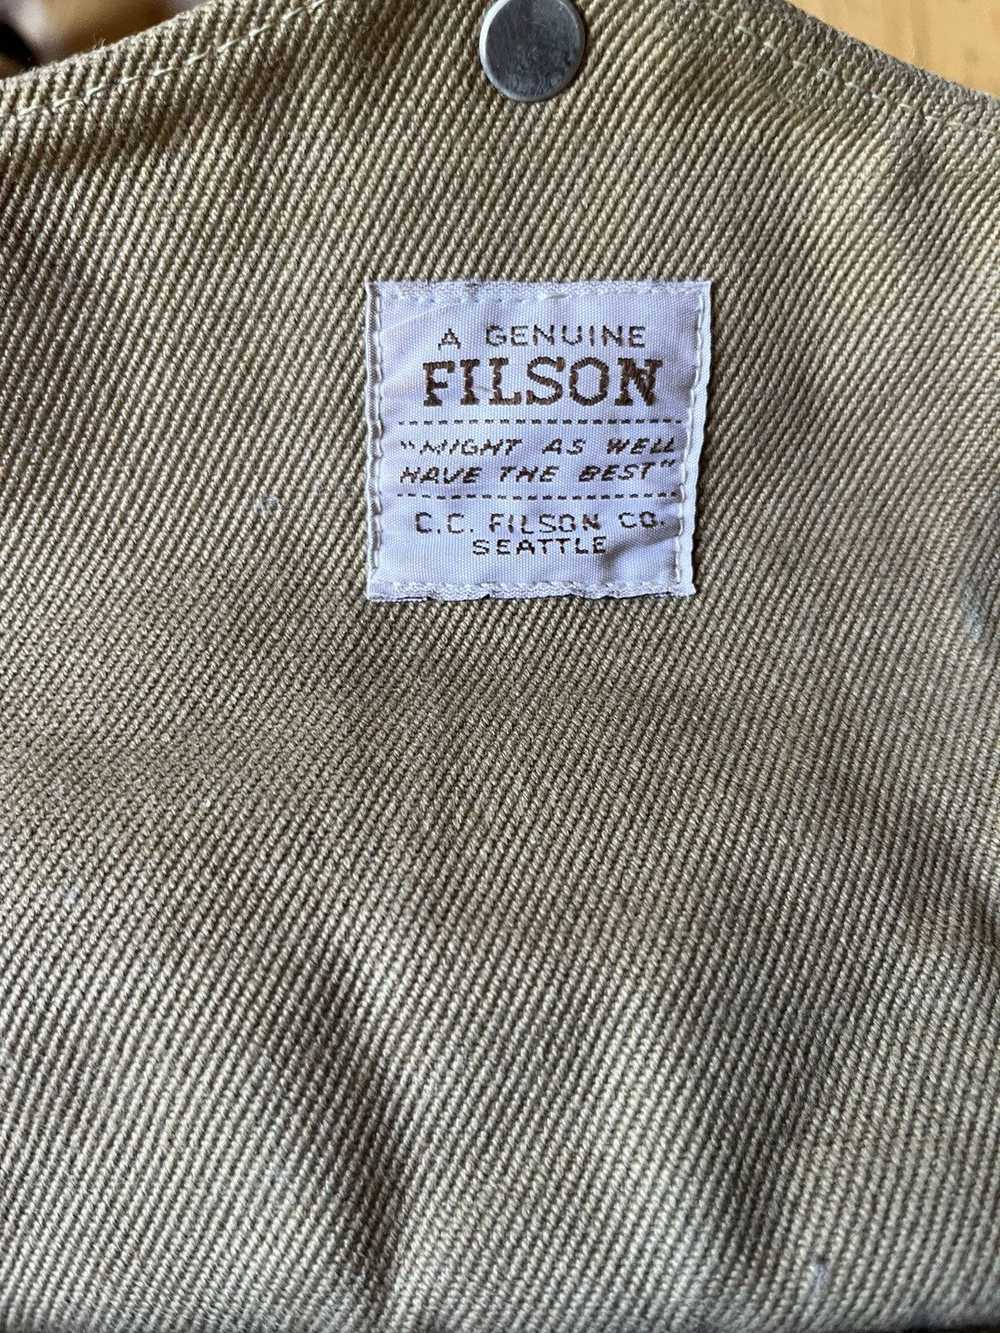 Filson Filson Original Briefcase - image 4